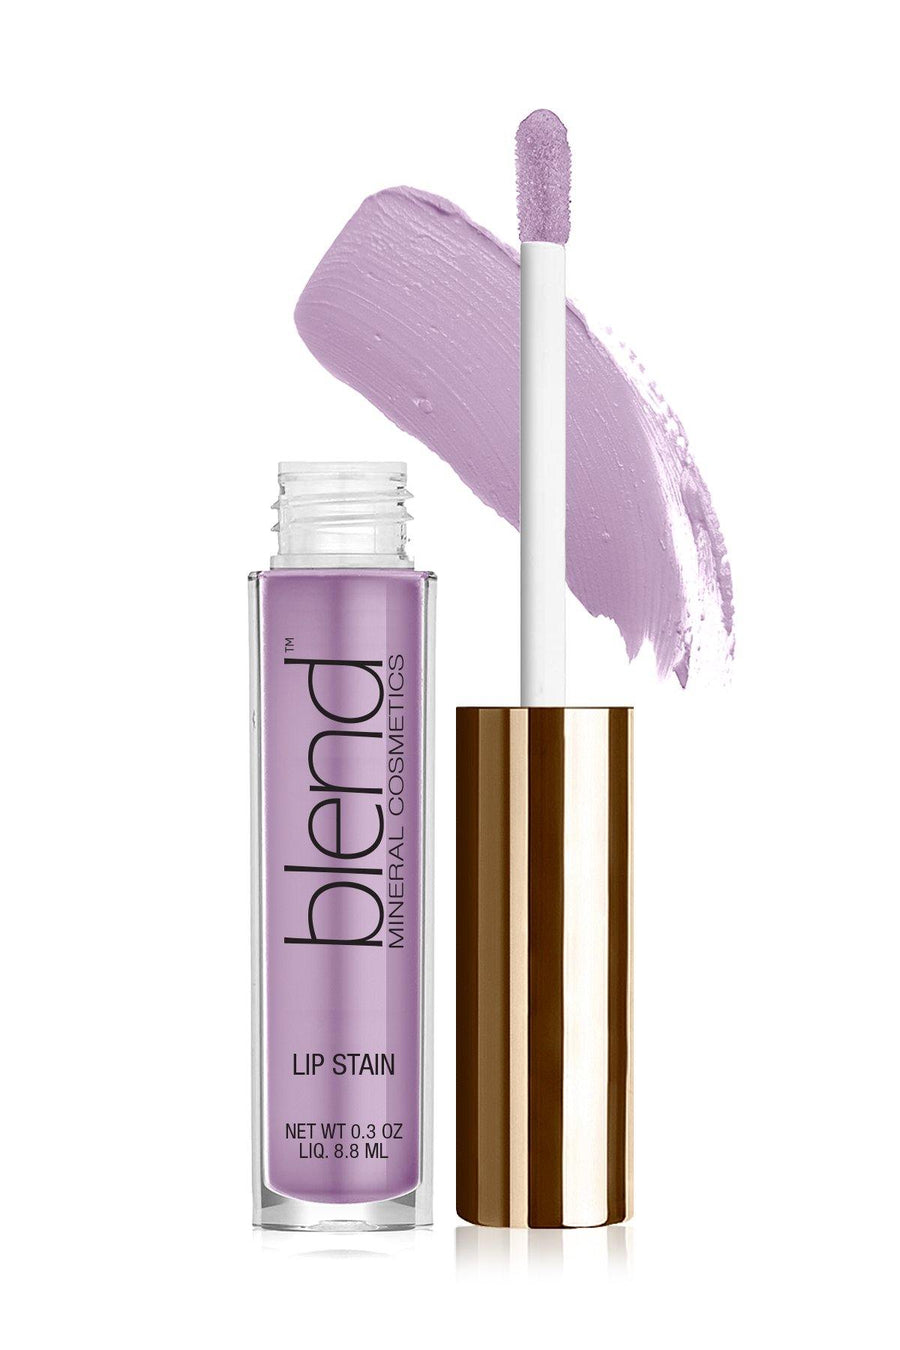 Lip Stain 11 - Light Mauve - Blend Mineral Cosmetics